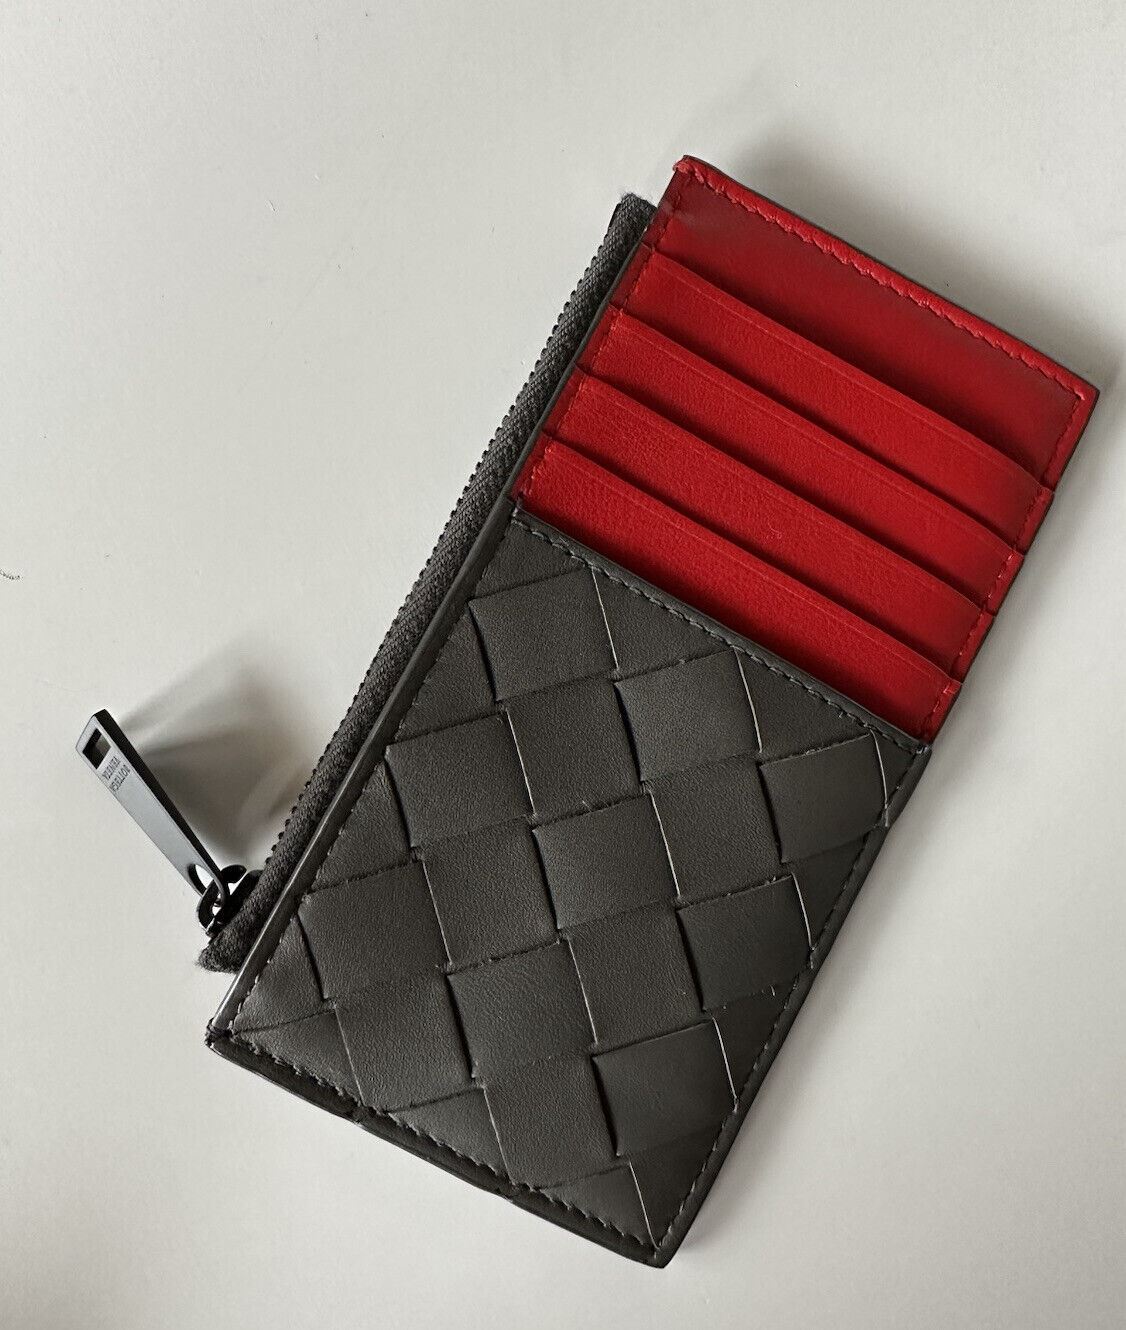 NWT $520 Bottega Veneta Leather Slim Wallet Intreccio Weave Graphite, Red 591379